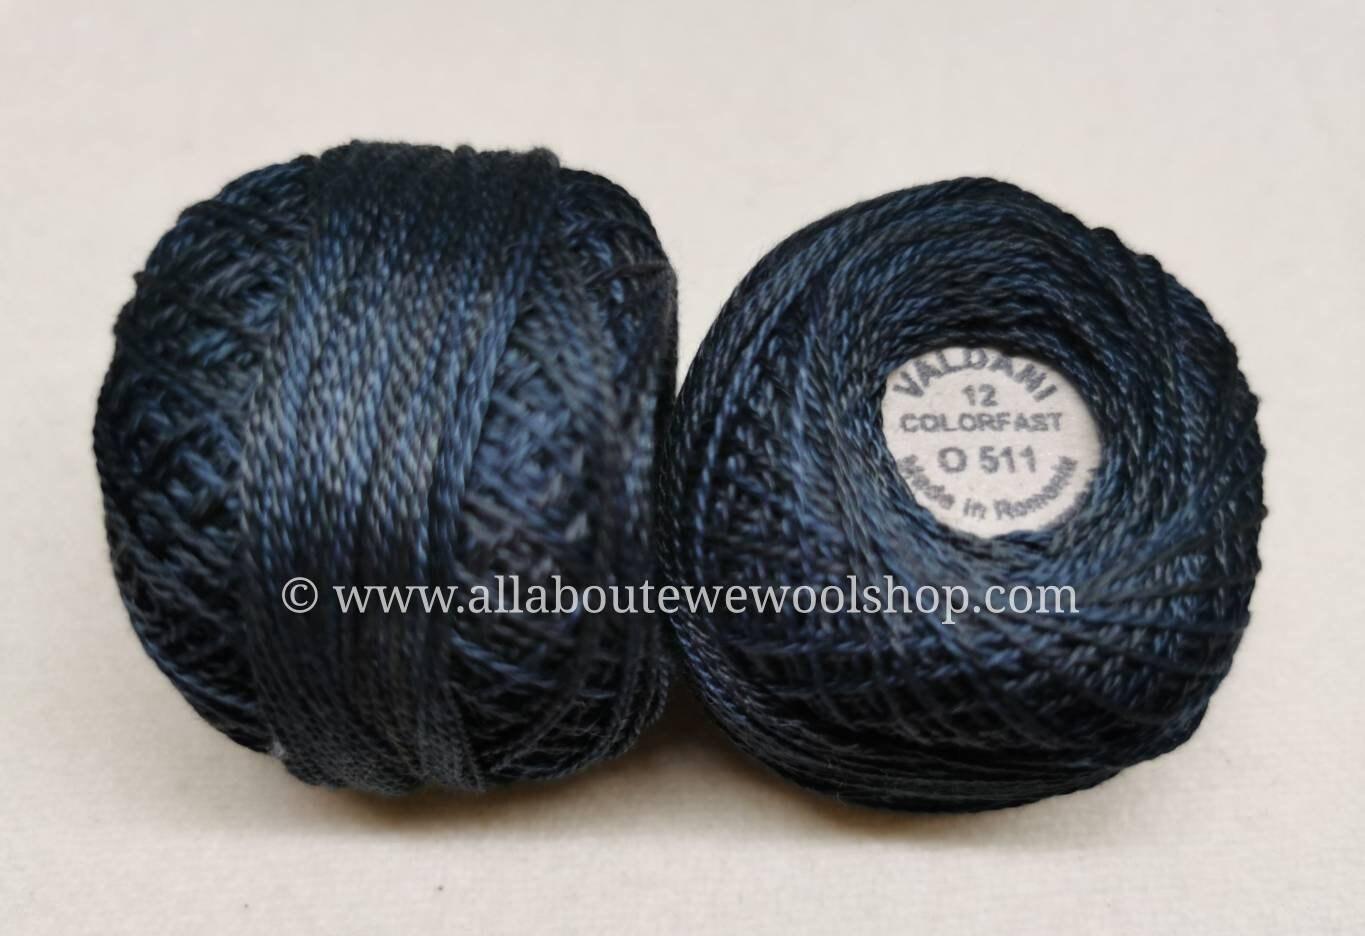 O511 #12 Valdani Pearl/Perle Cotton Thread - All About Ewe Wool Shop